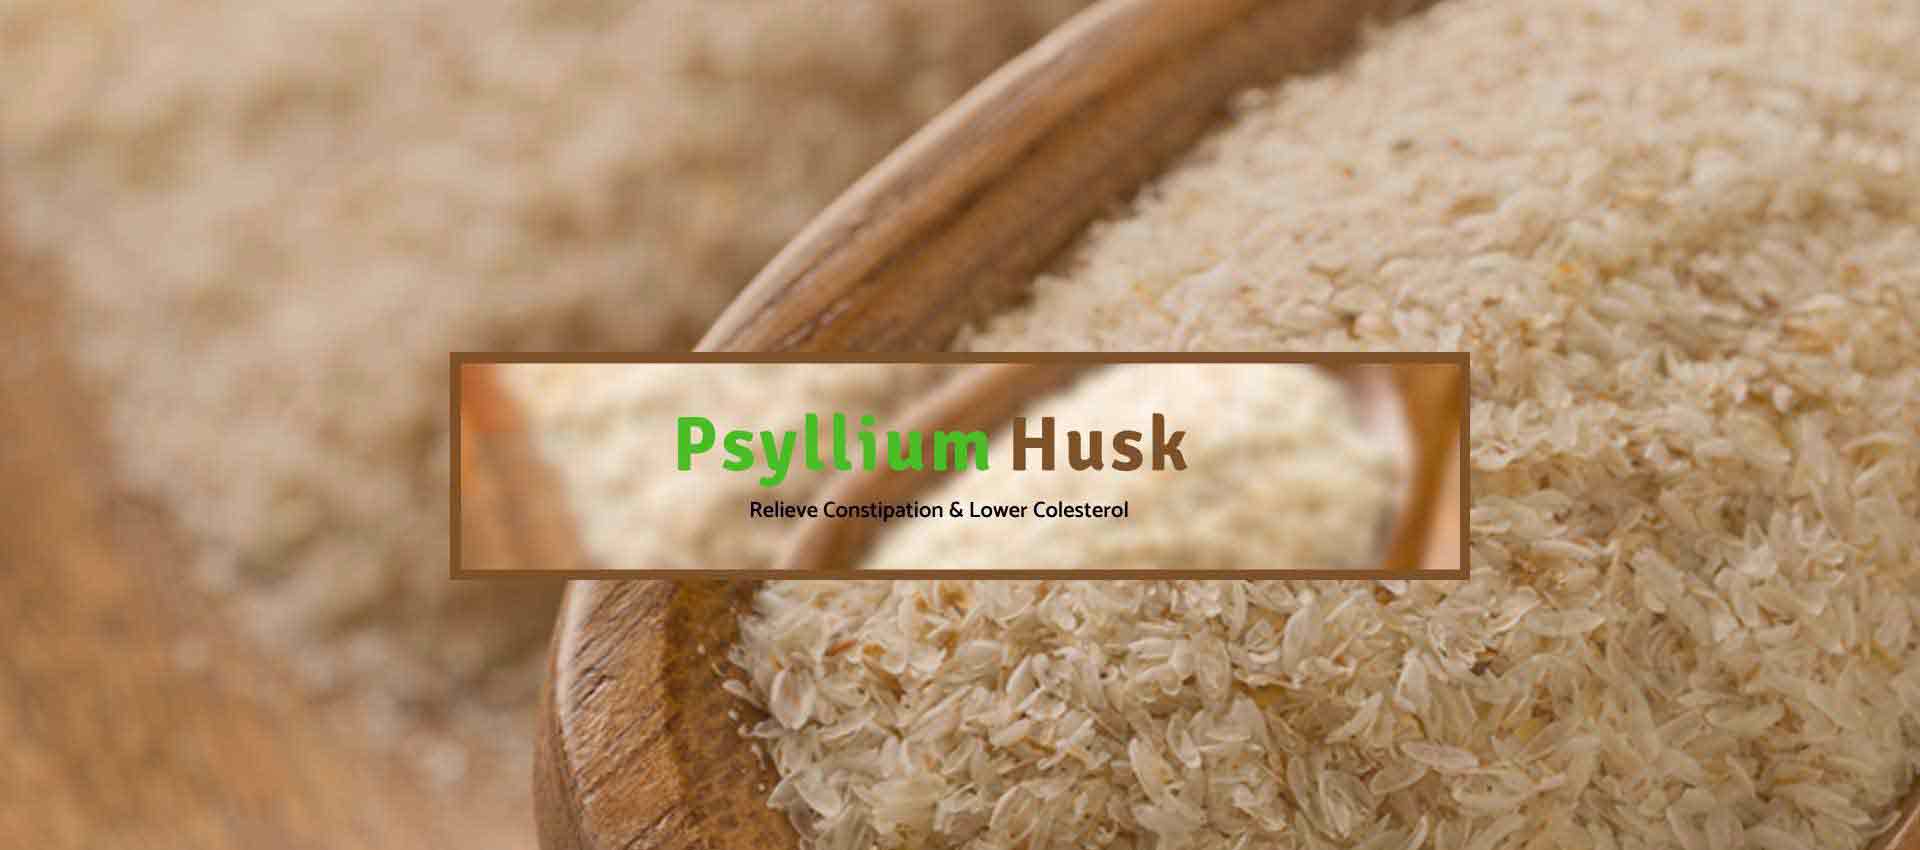 Psyllium Husk Manufacturers in Kolkata